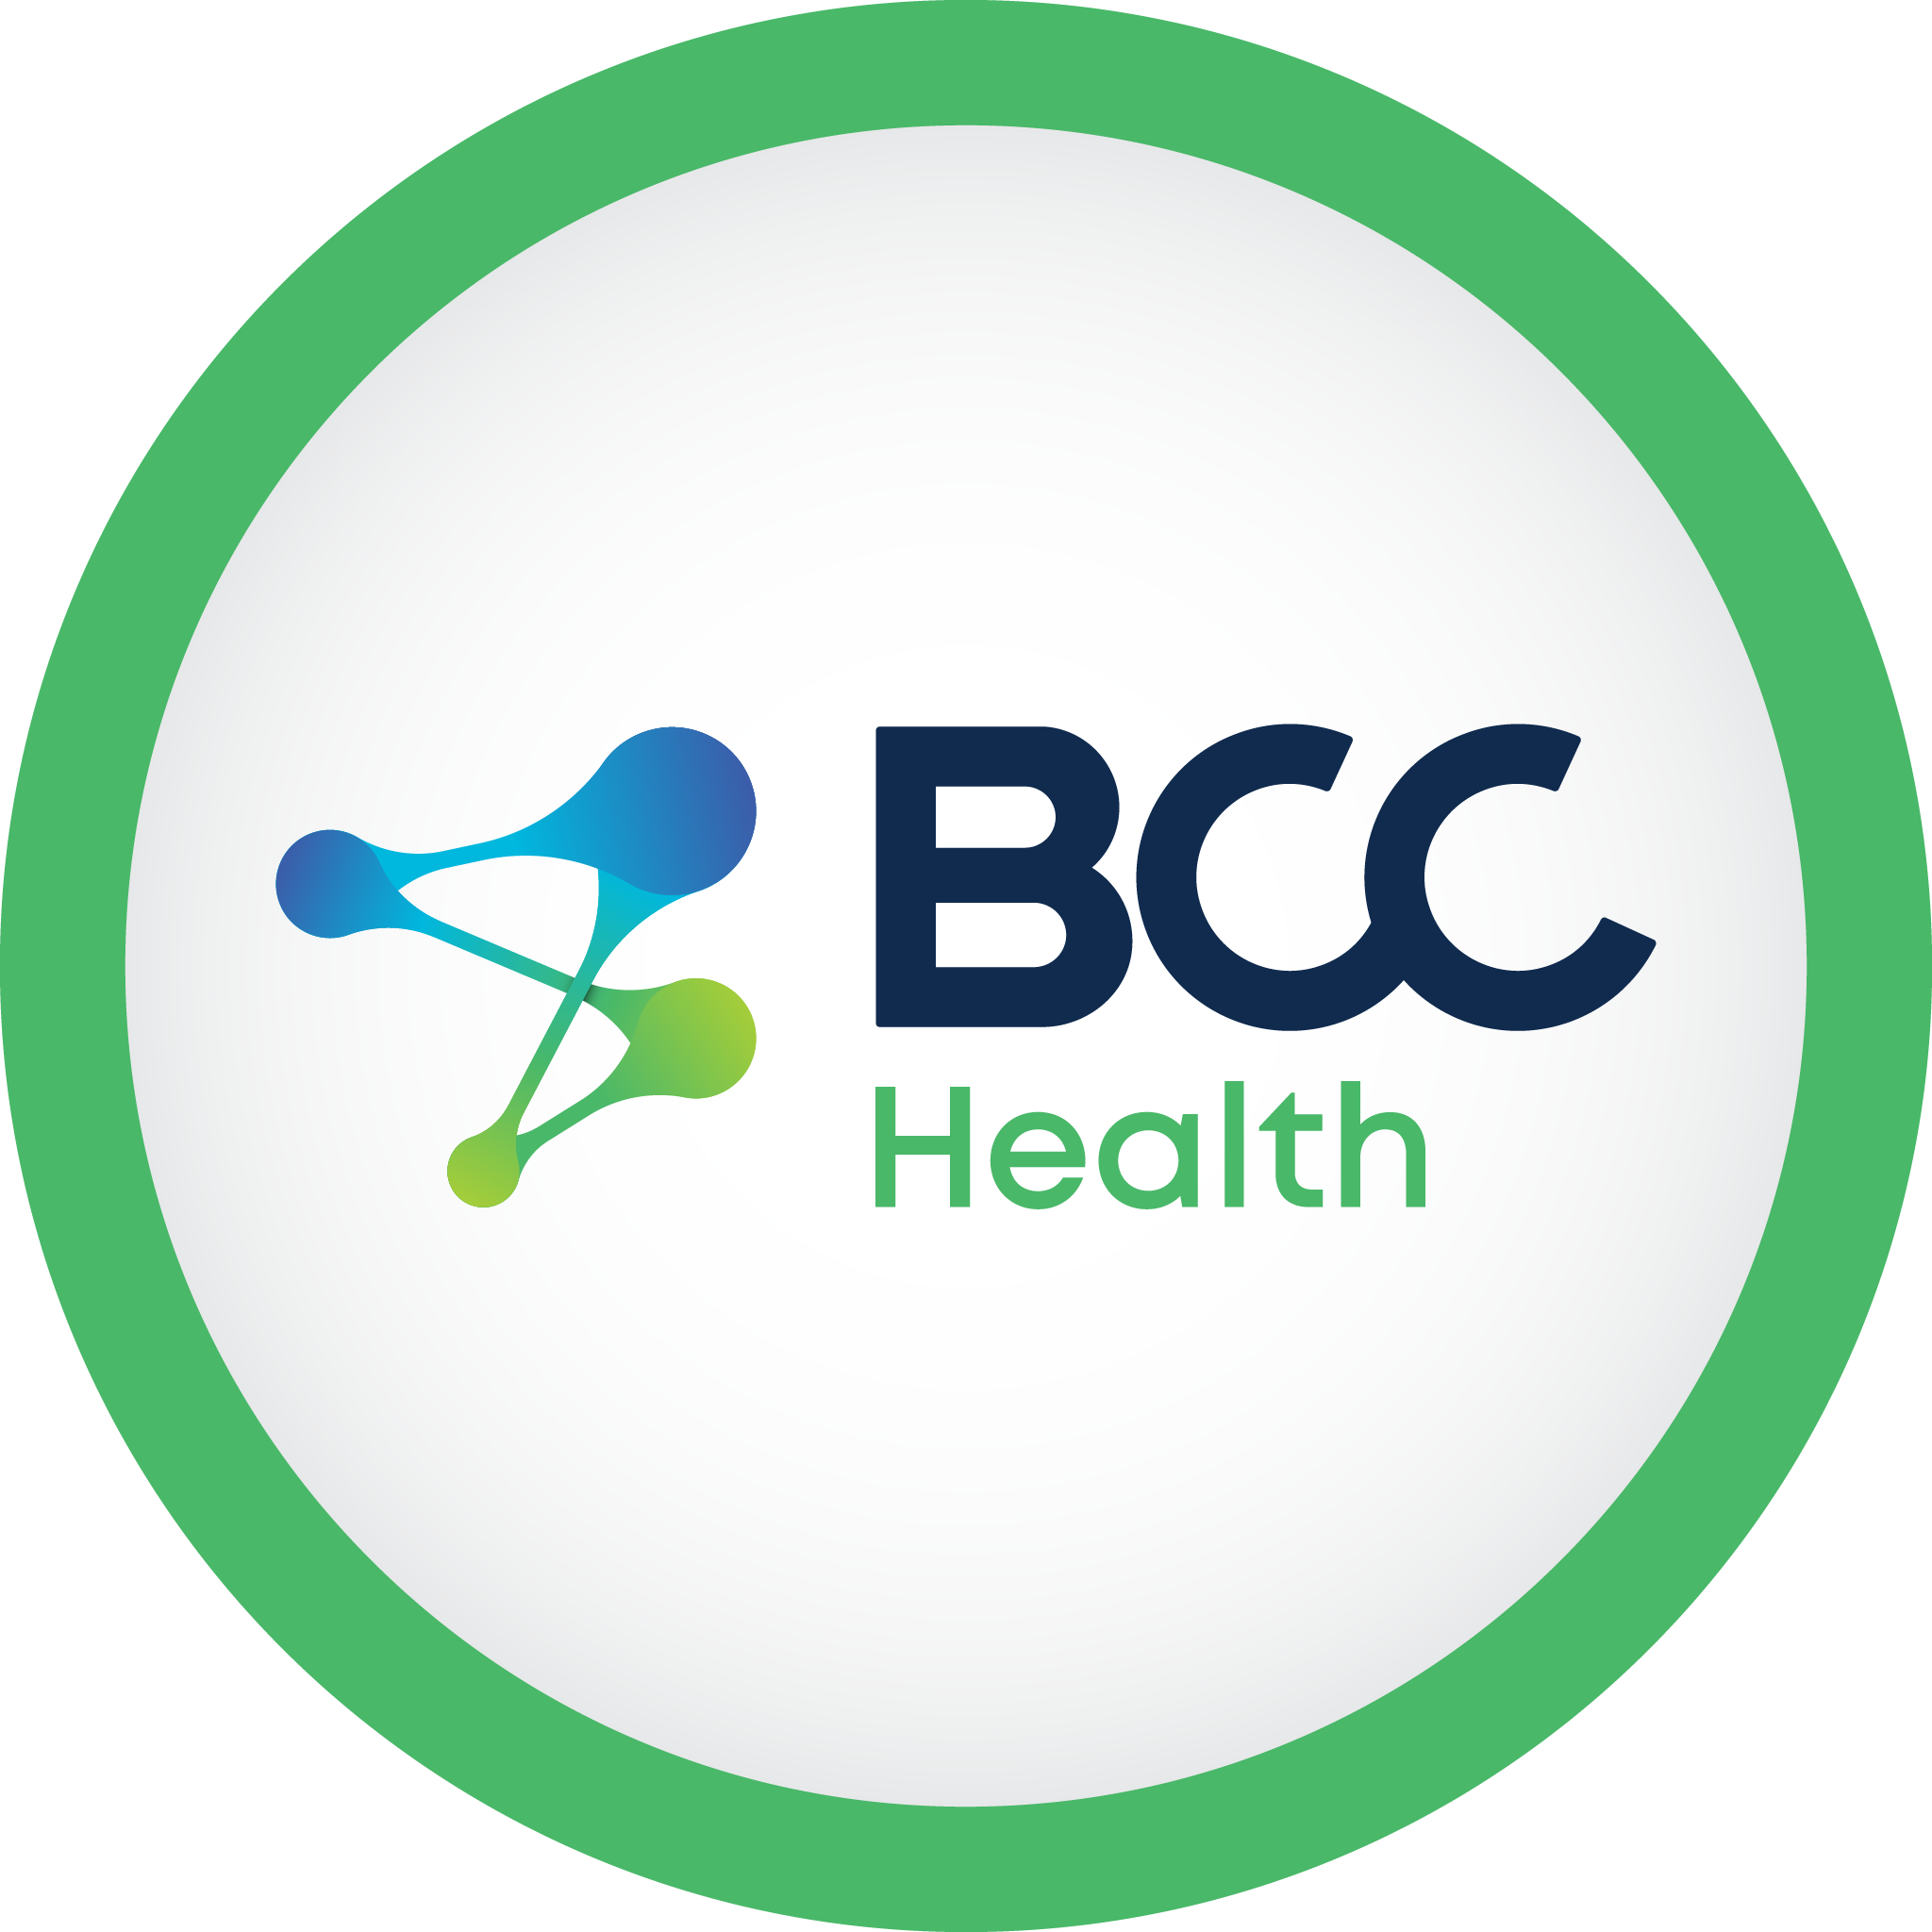 BCC Health